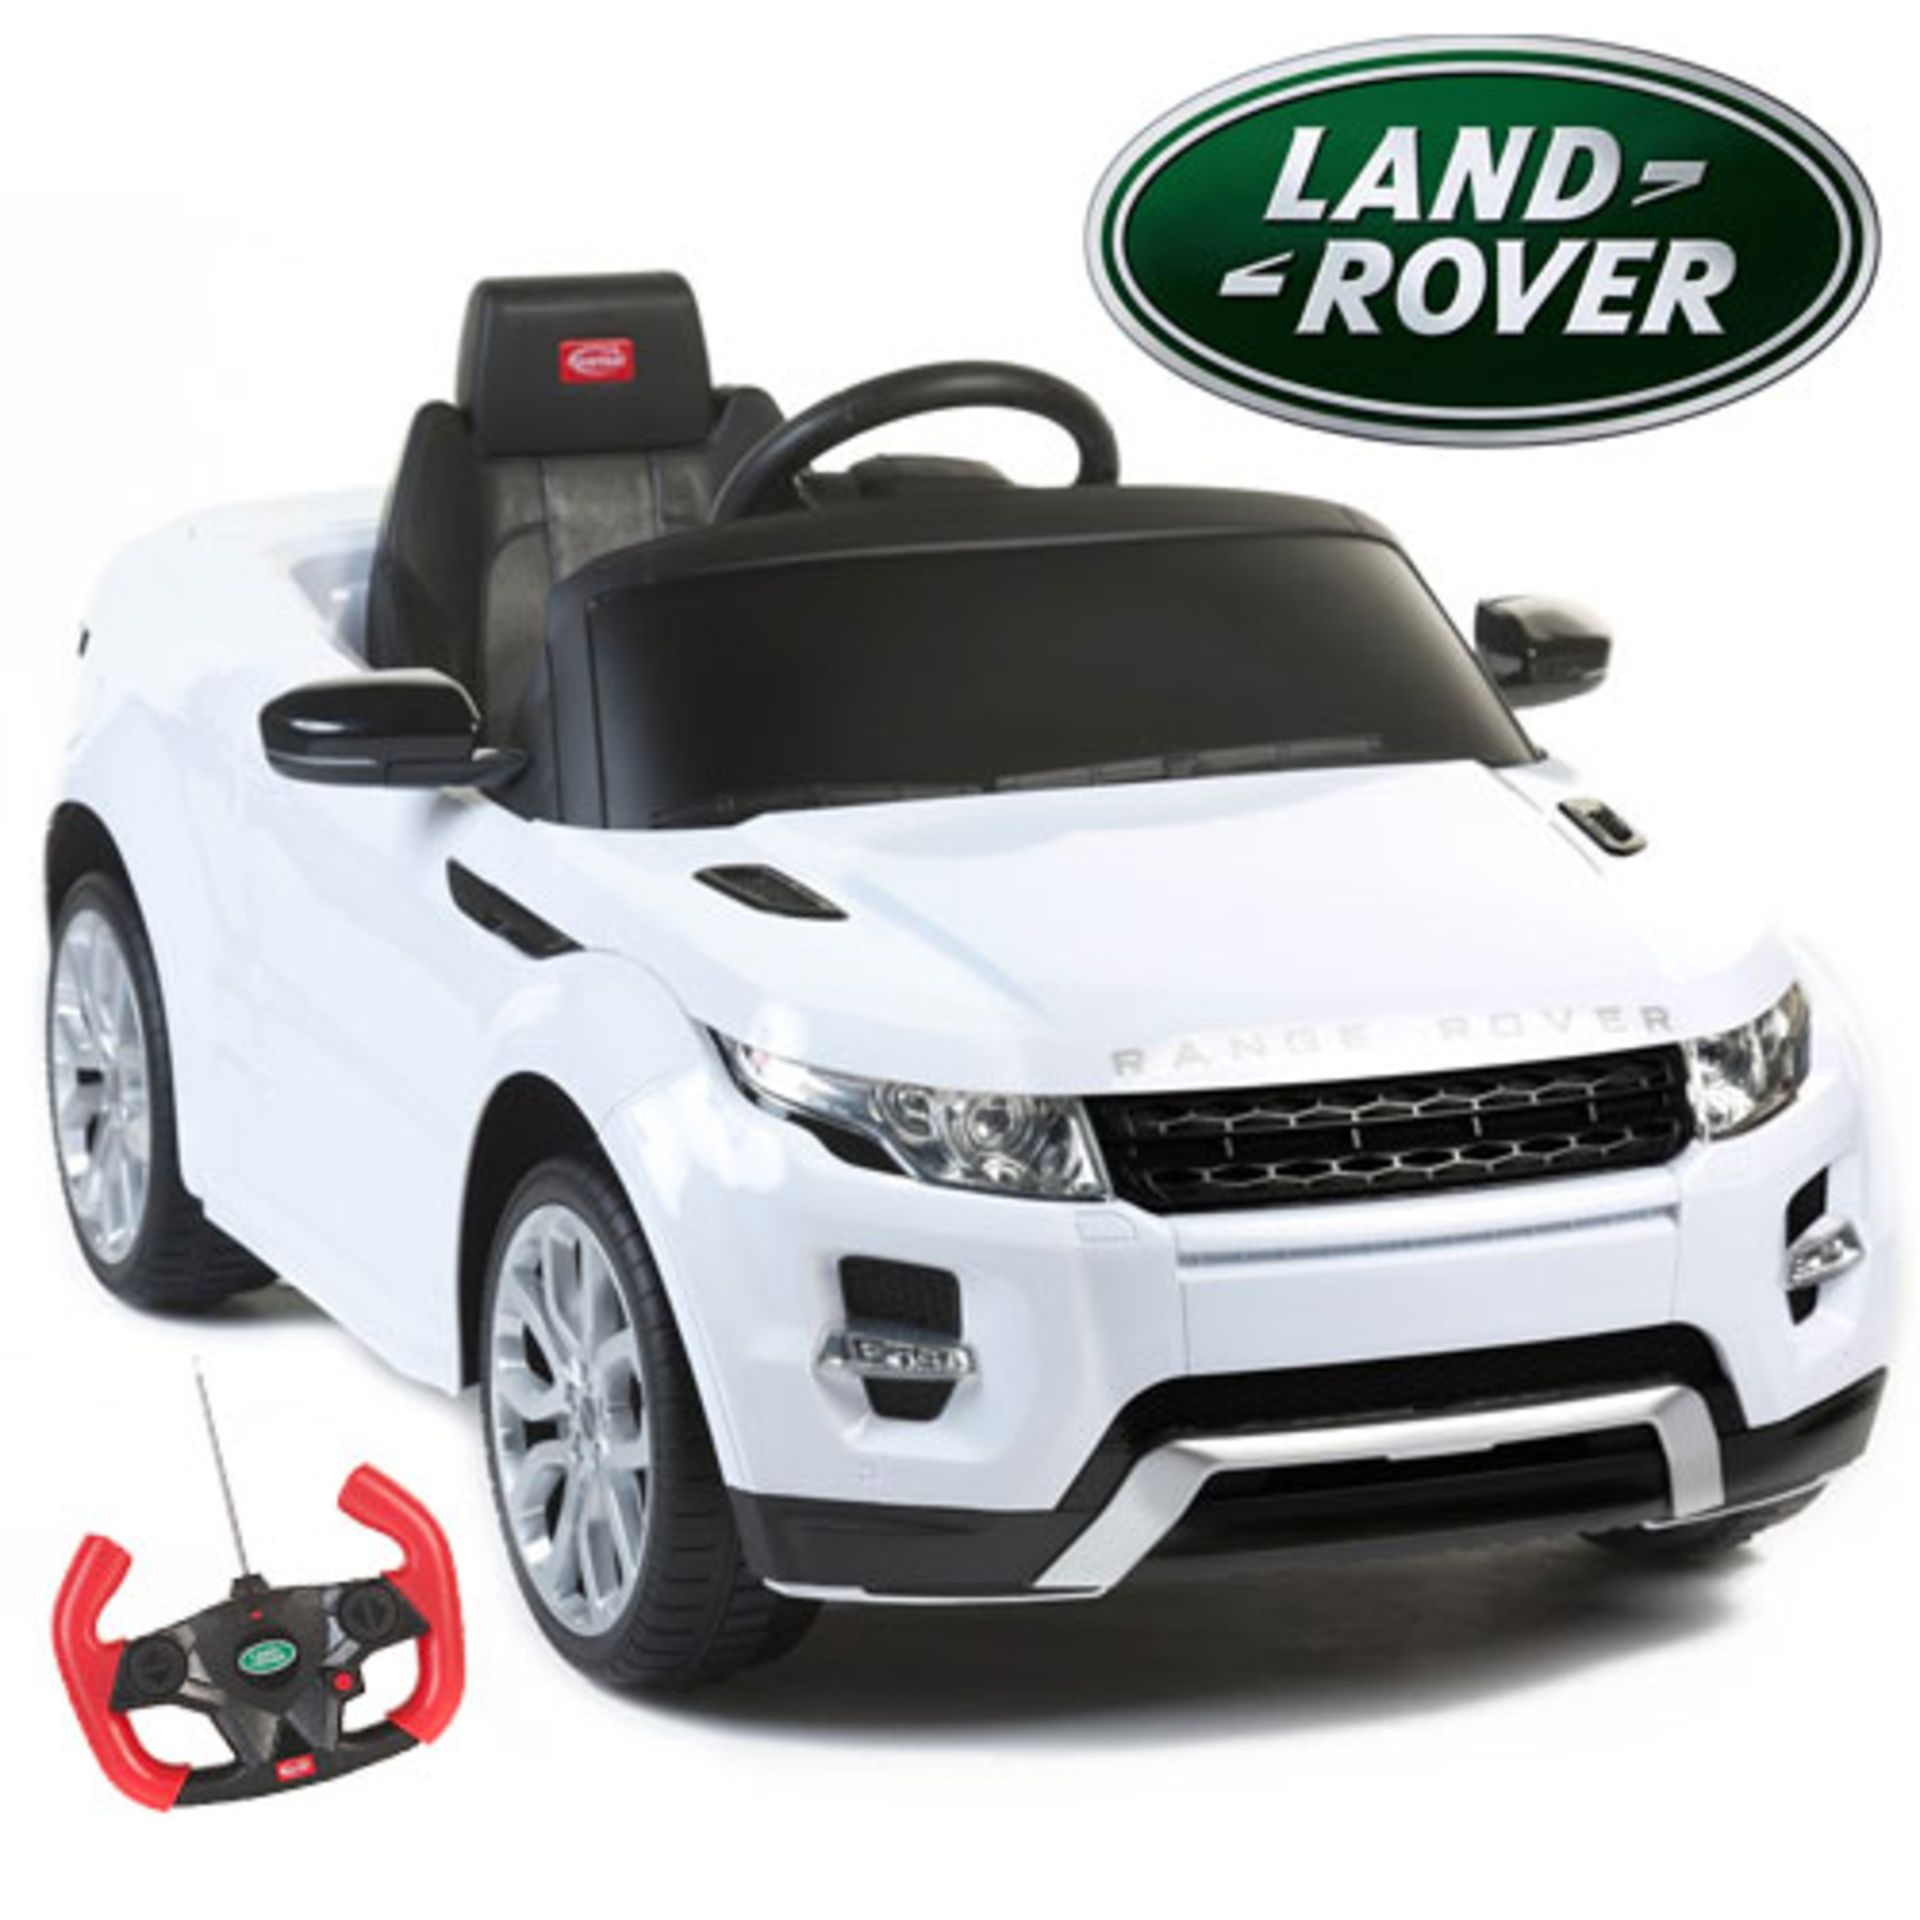 V Brand New Range Rover Evoque 12V Ride on Car - Parental Override Remote Control - Officially